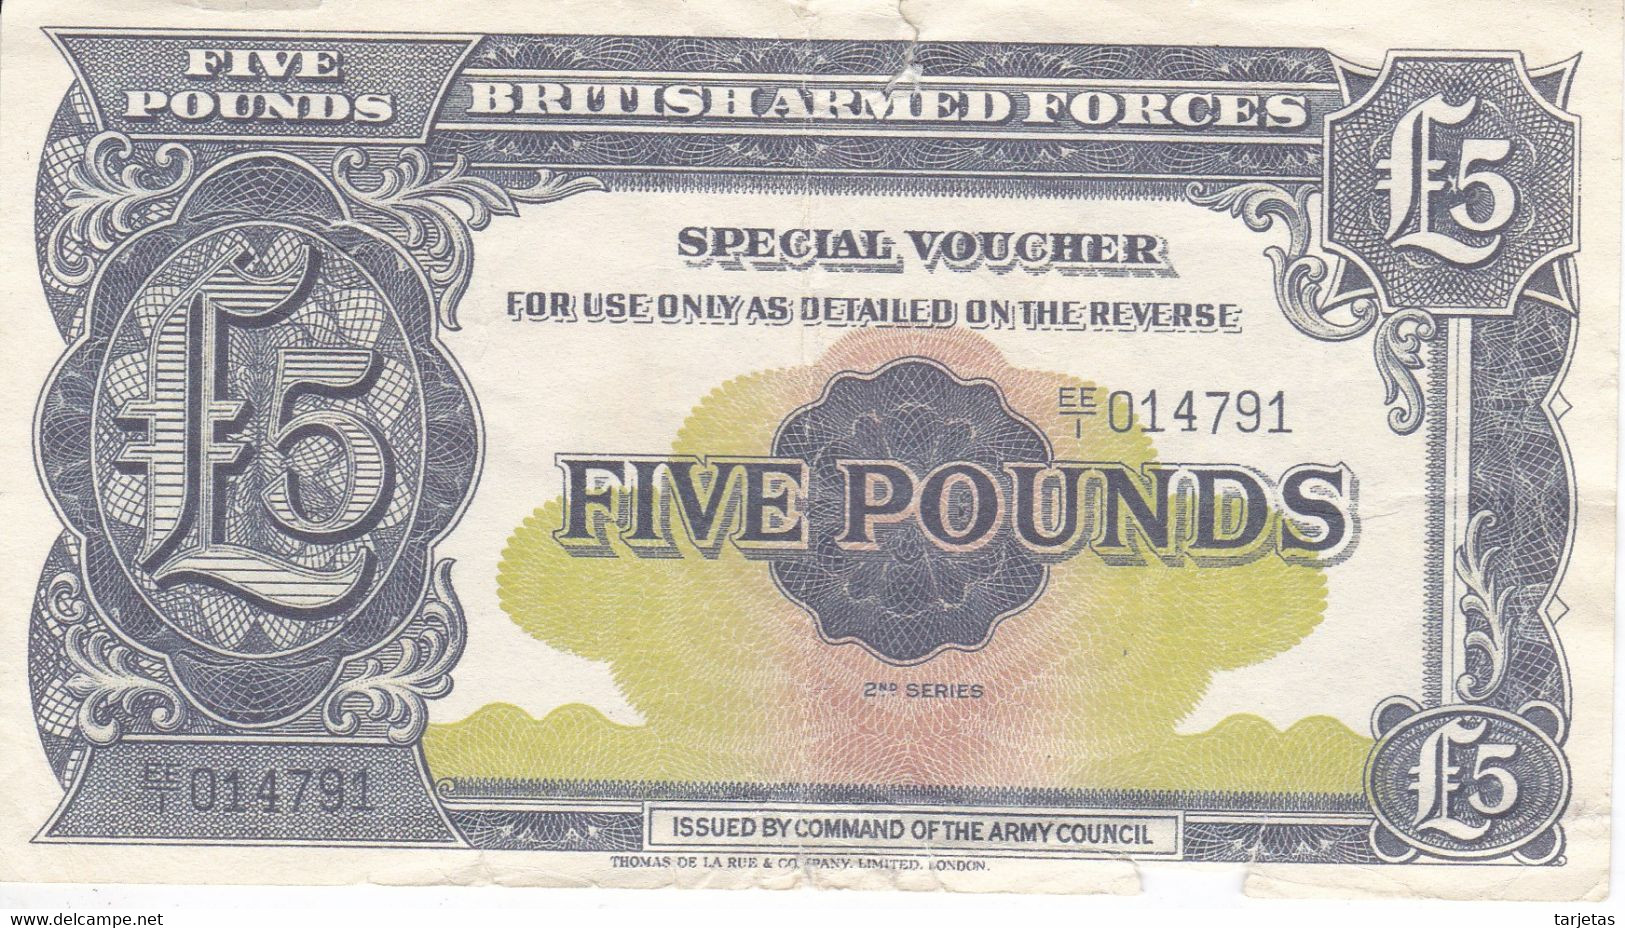 BILLETE DE REINO UNIDO DE 5 POUNDS BRITISH ARMED FORCES (BANK NOTE) - British Armed Forces & Special Vouchers